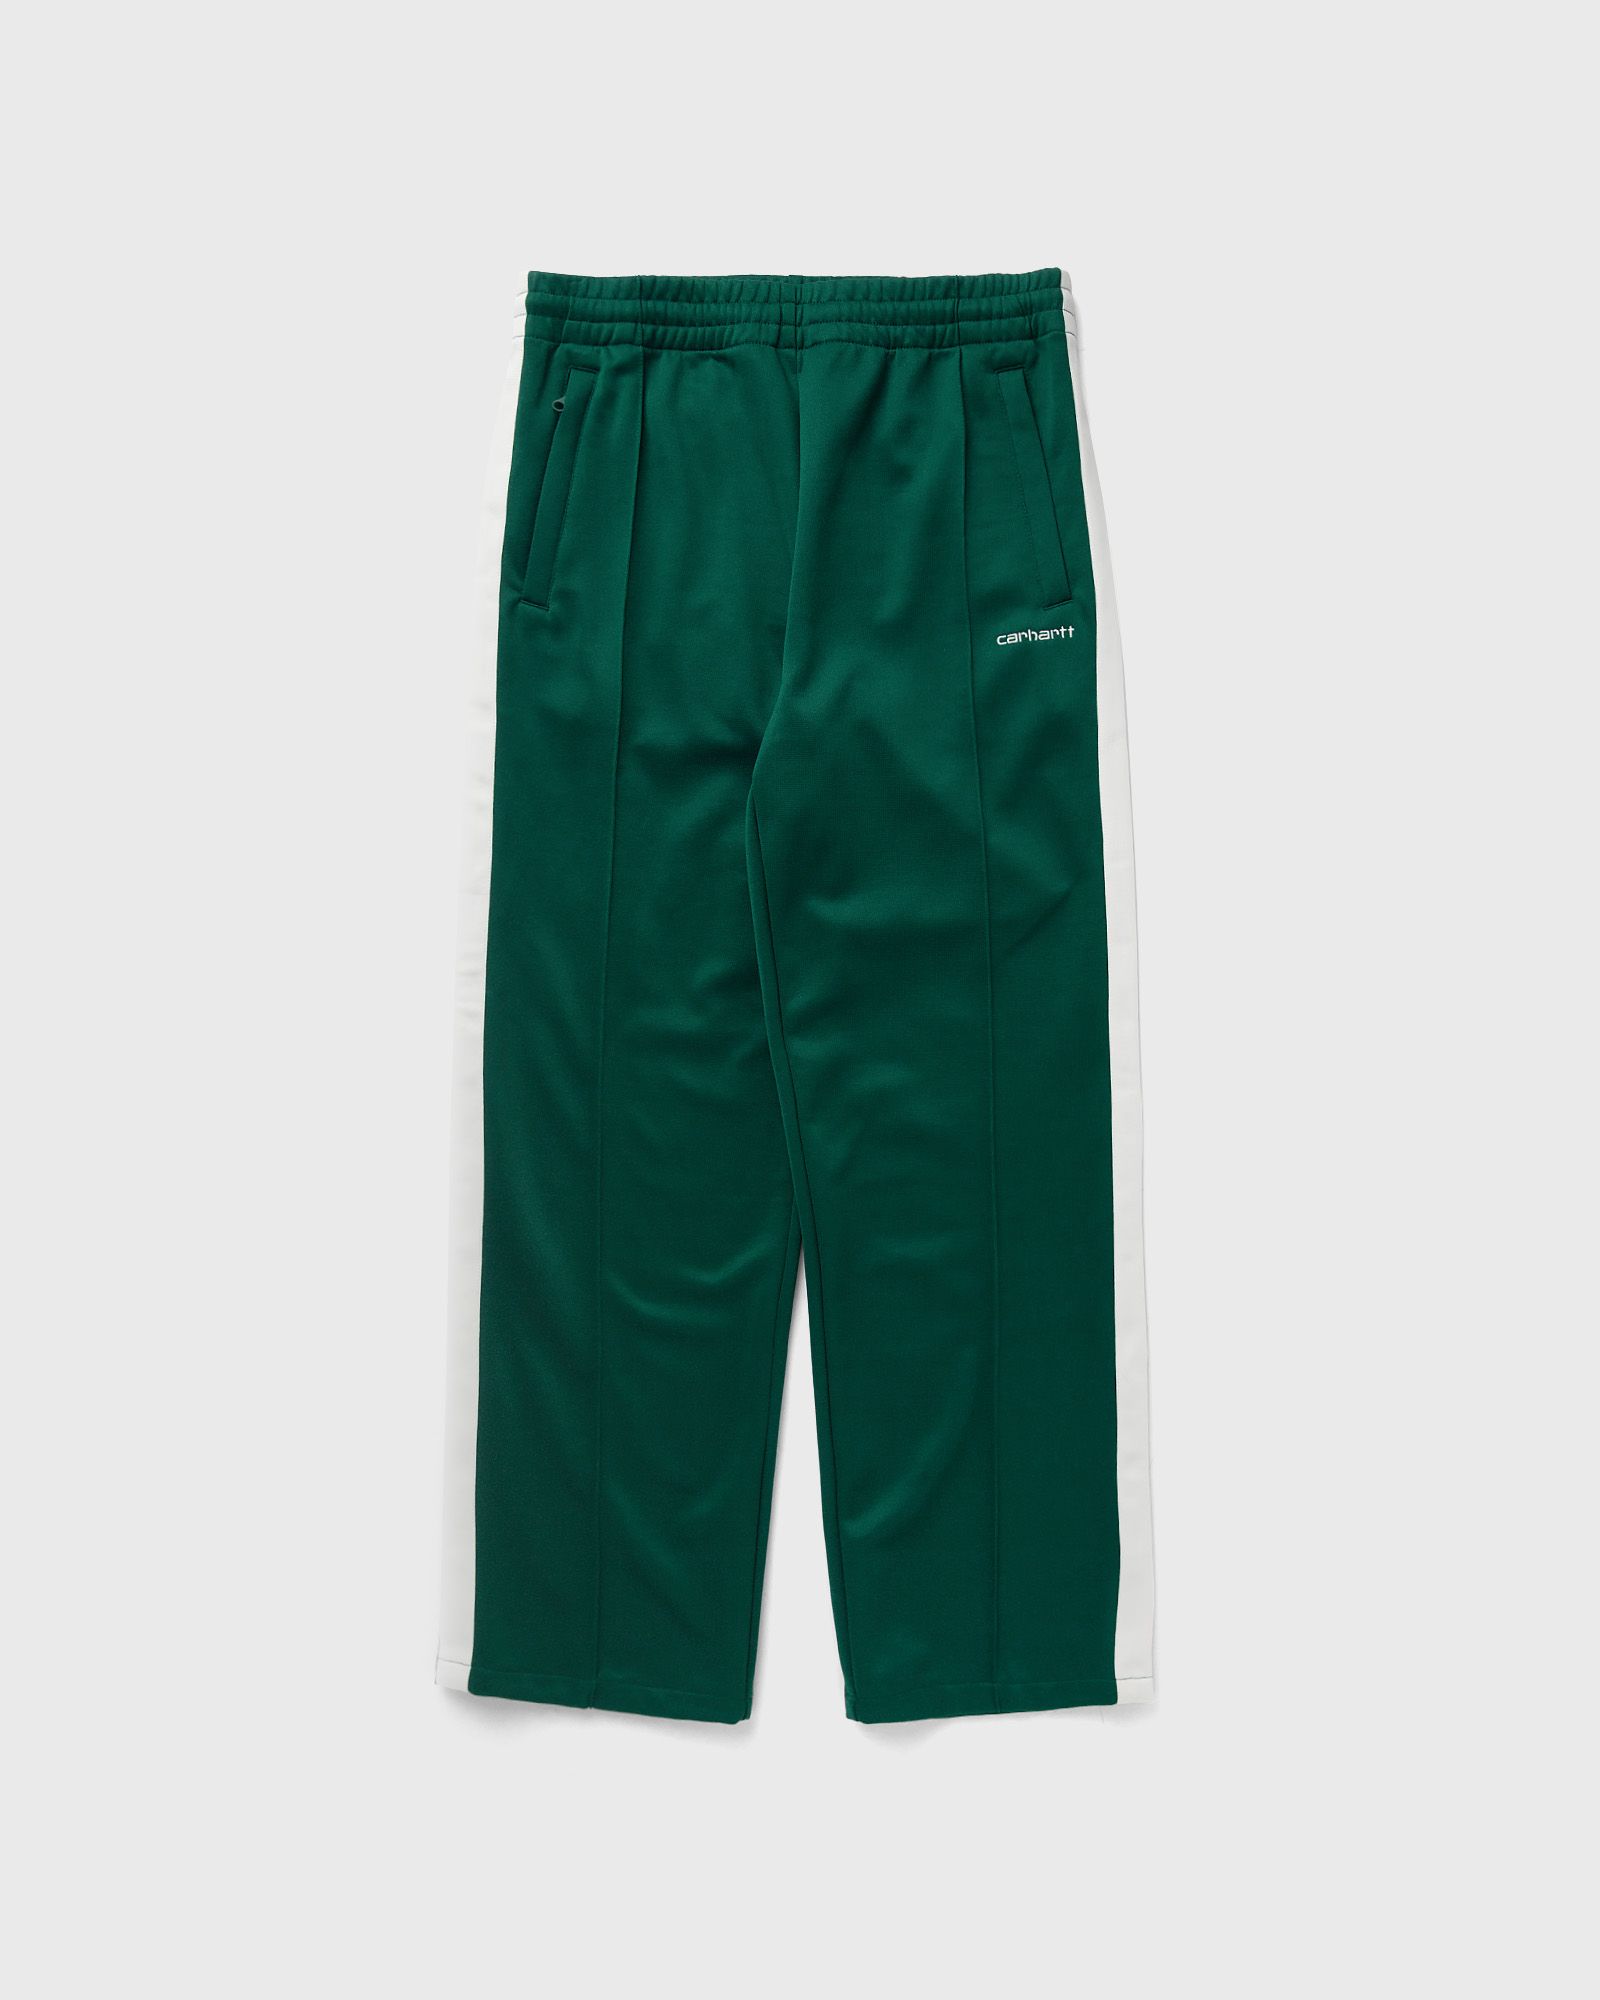 Carhartt WIP Benchill Sweat Pant men Sweatpants green in Größe:M von Carhartt WIP